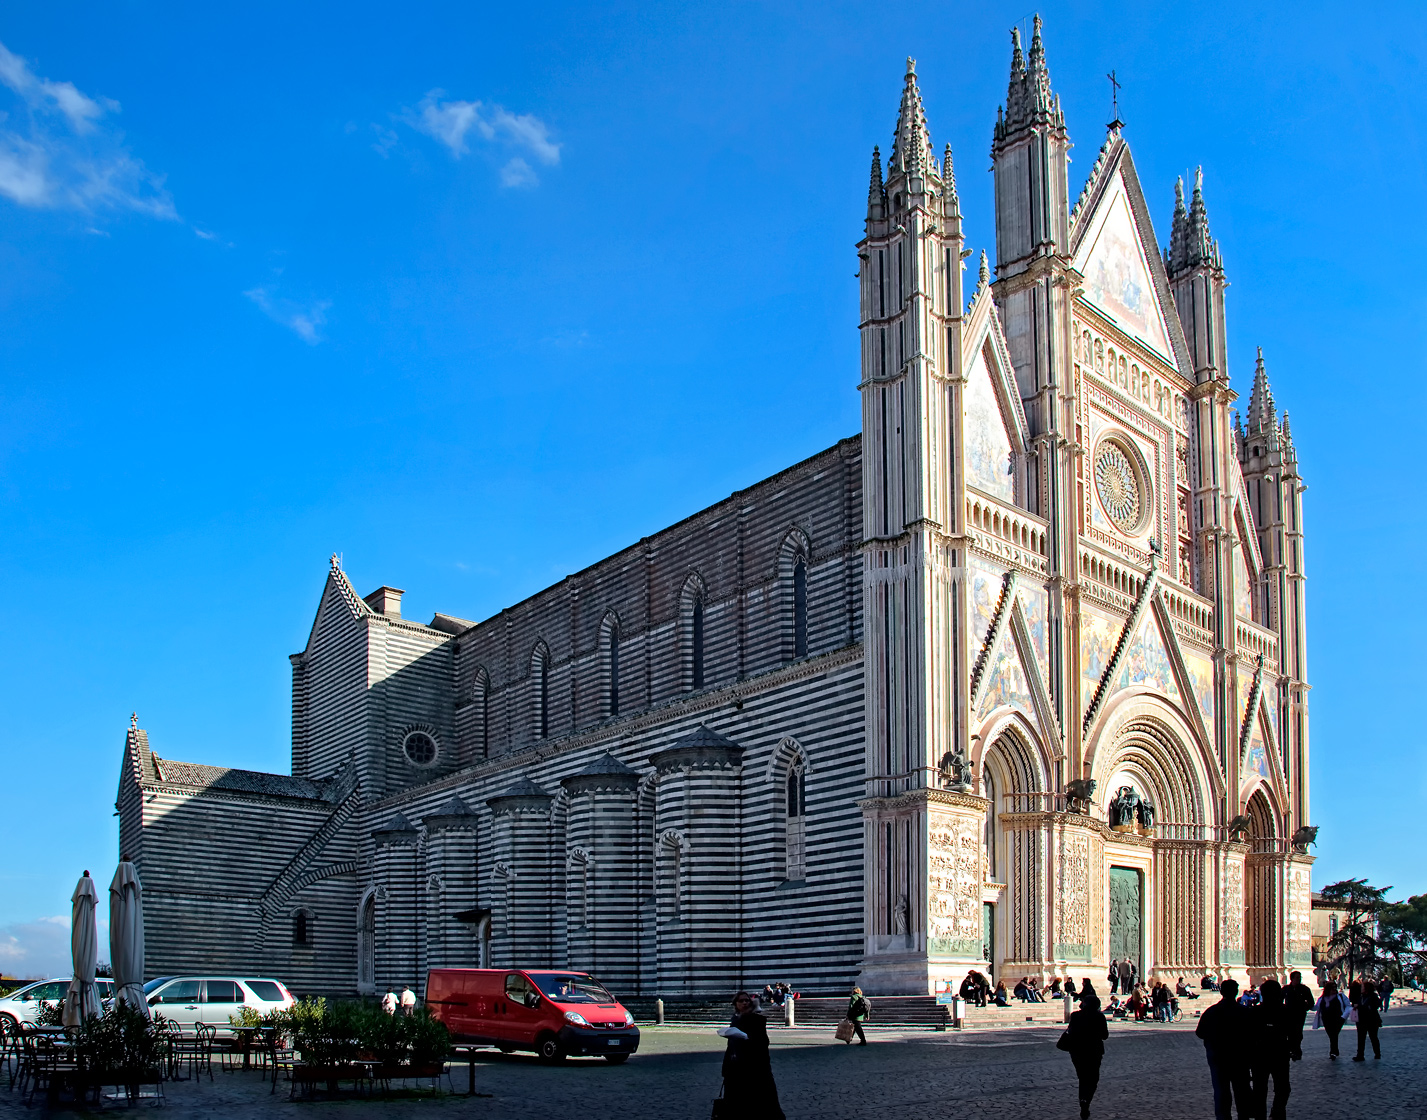 Duomo di Orvieto (Cathedral of Orvieto)